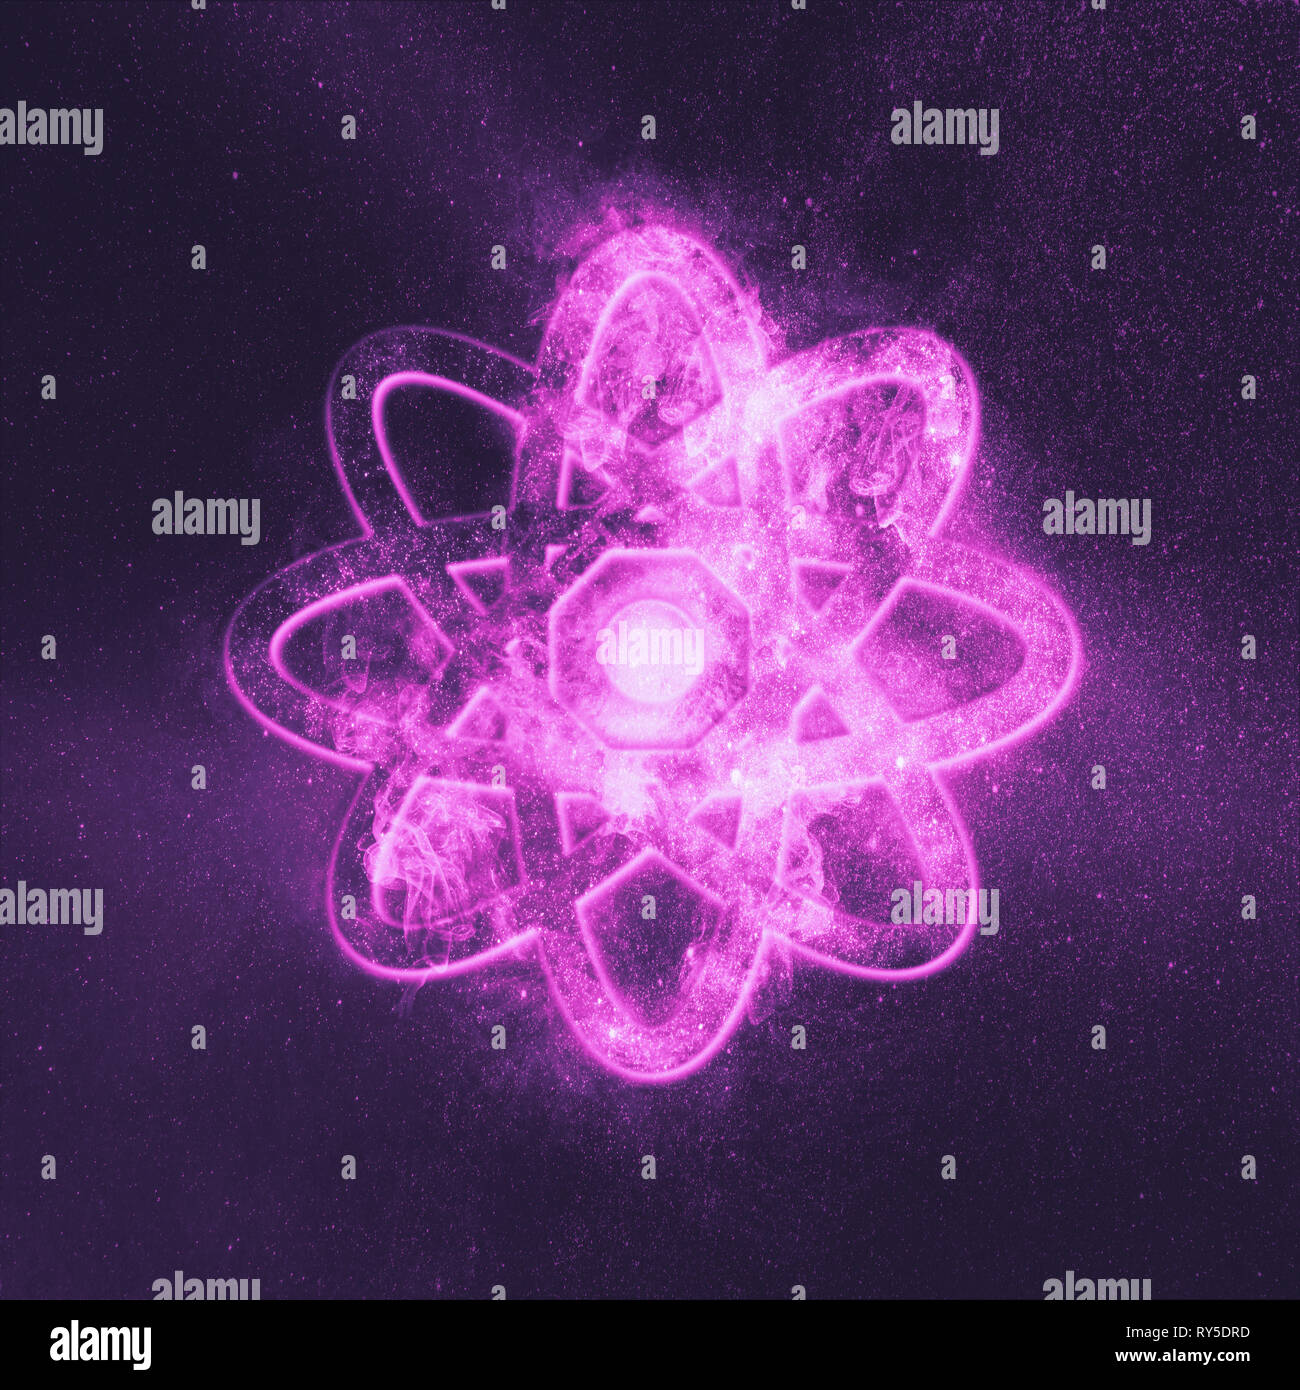 atom symbol wallpaper